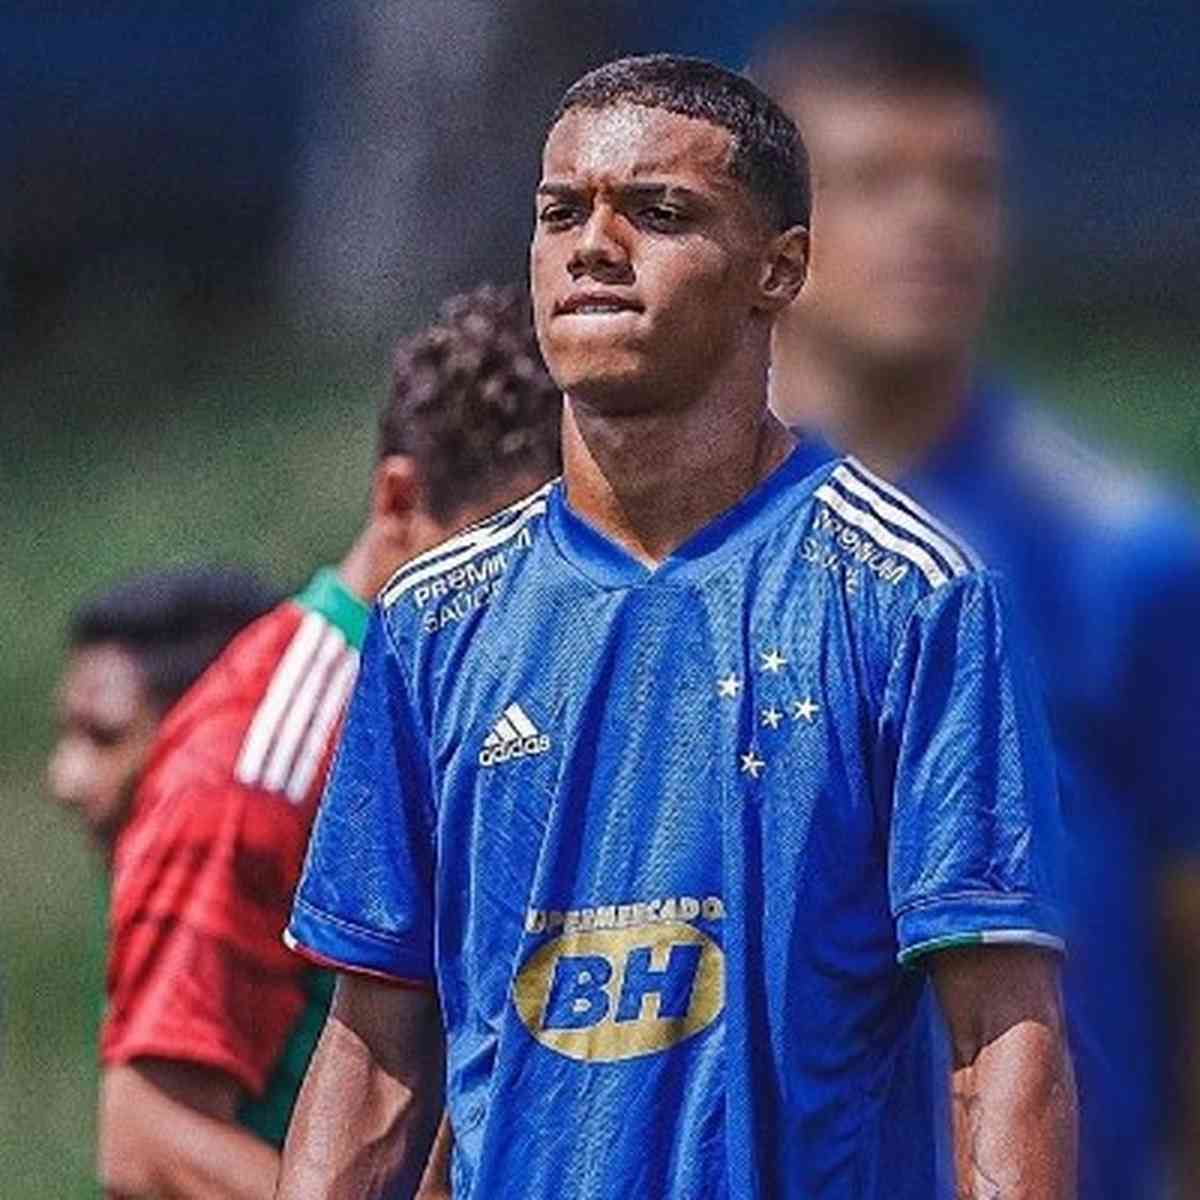 This is Joga Bonito - Ronaldinho, Neymar, Robinho